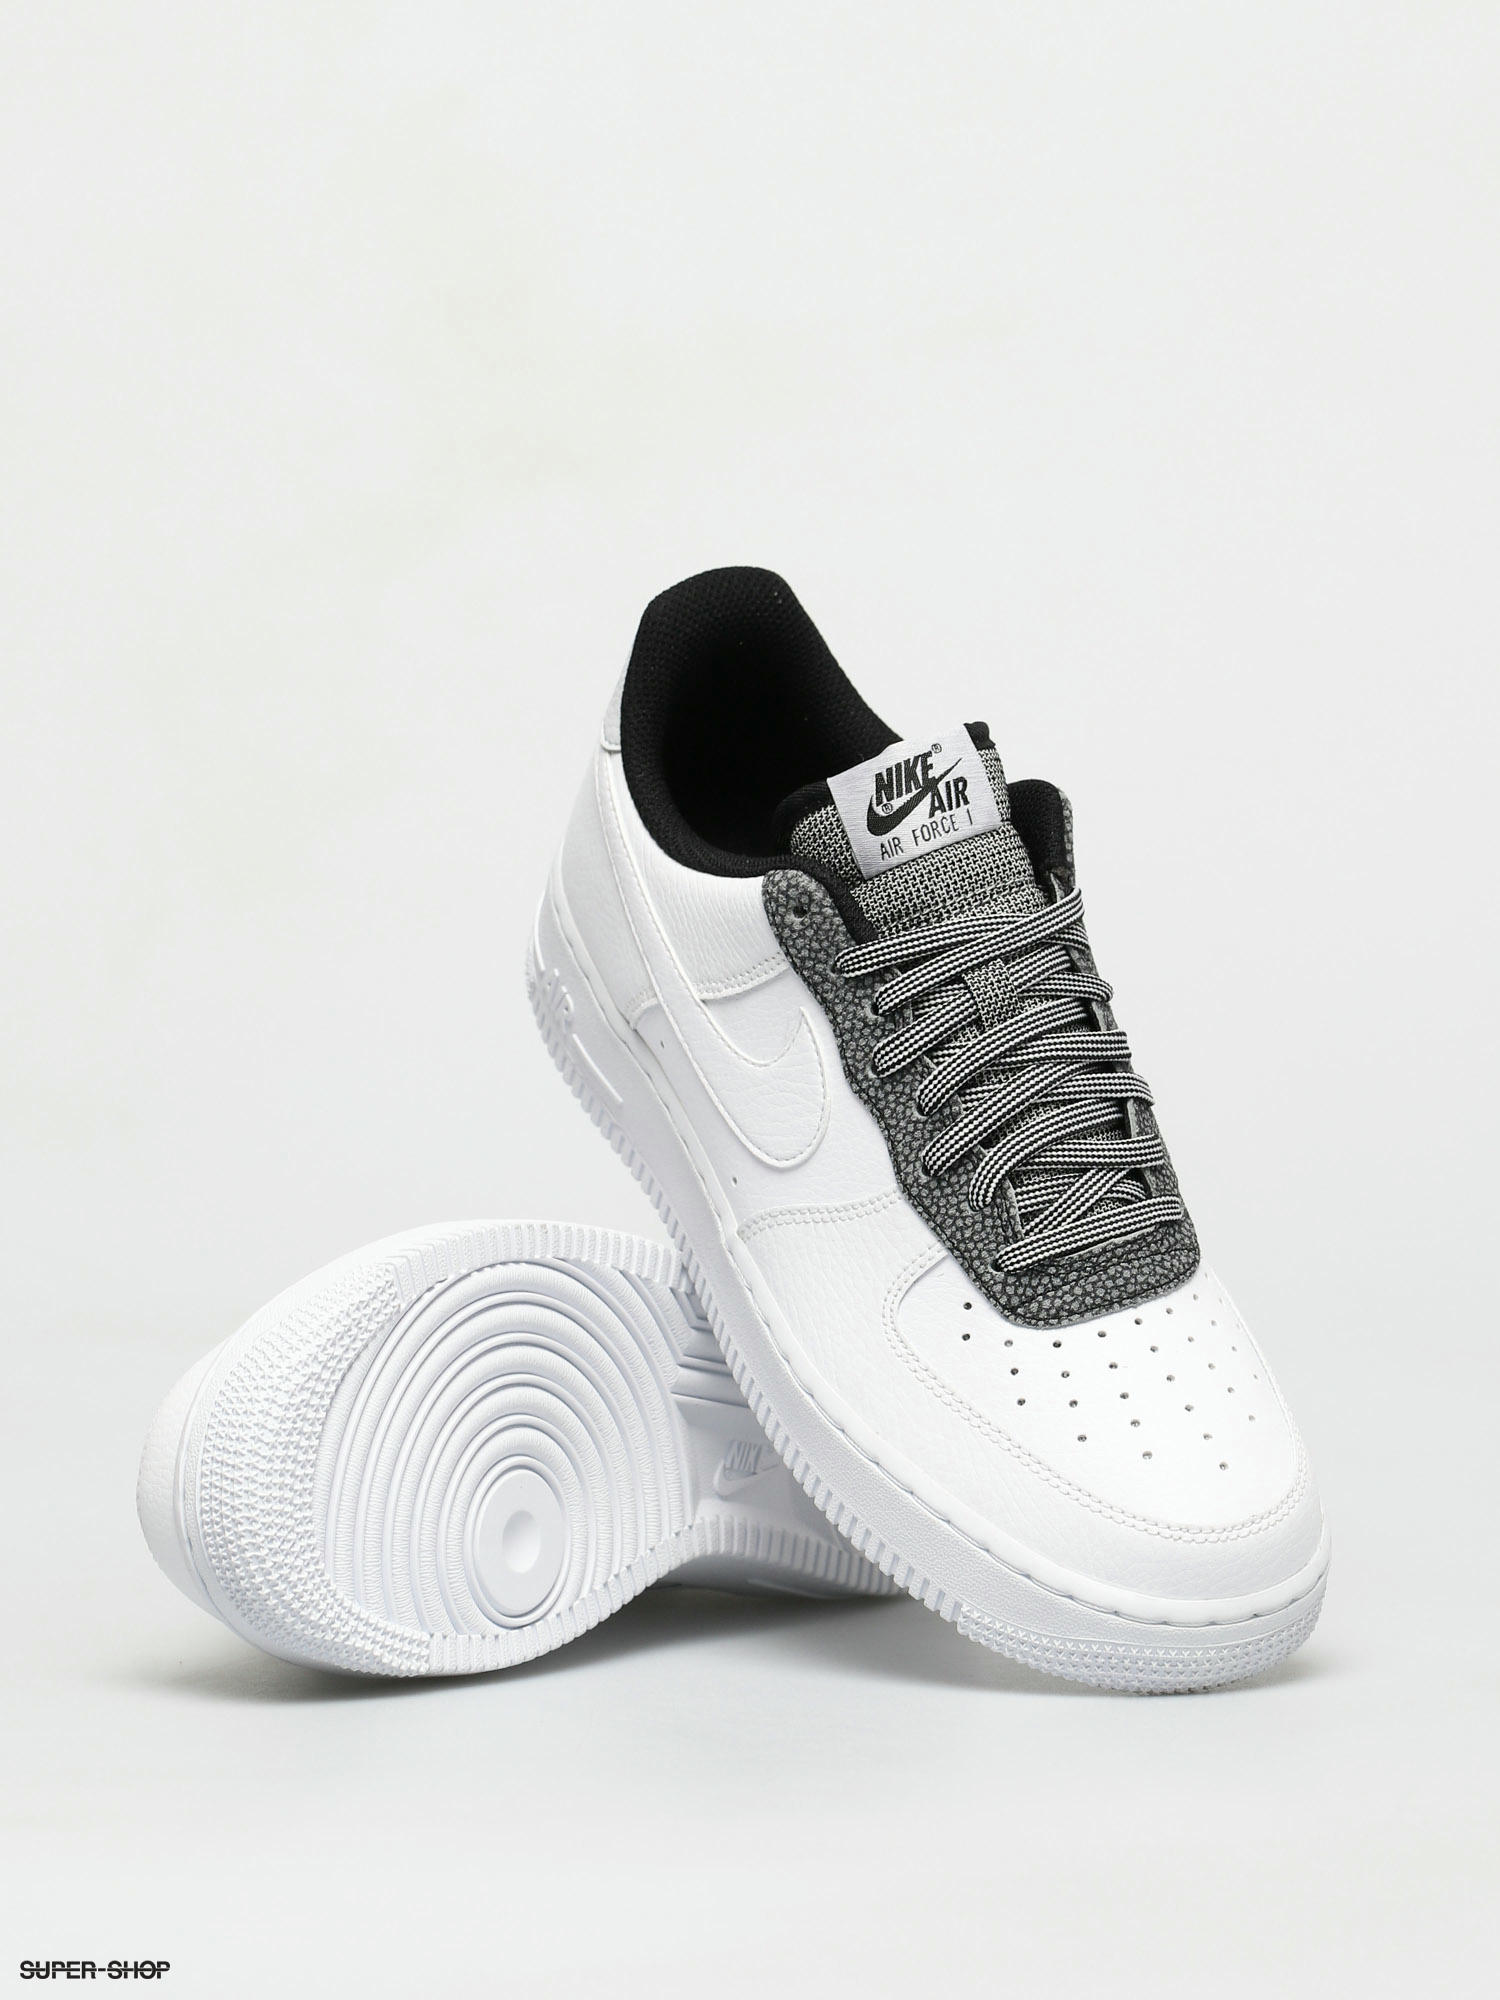 Nike Air Force 1 07 LV8 White Cool Grey/Pure Platinum - CK4363-100